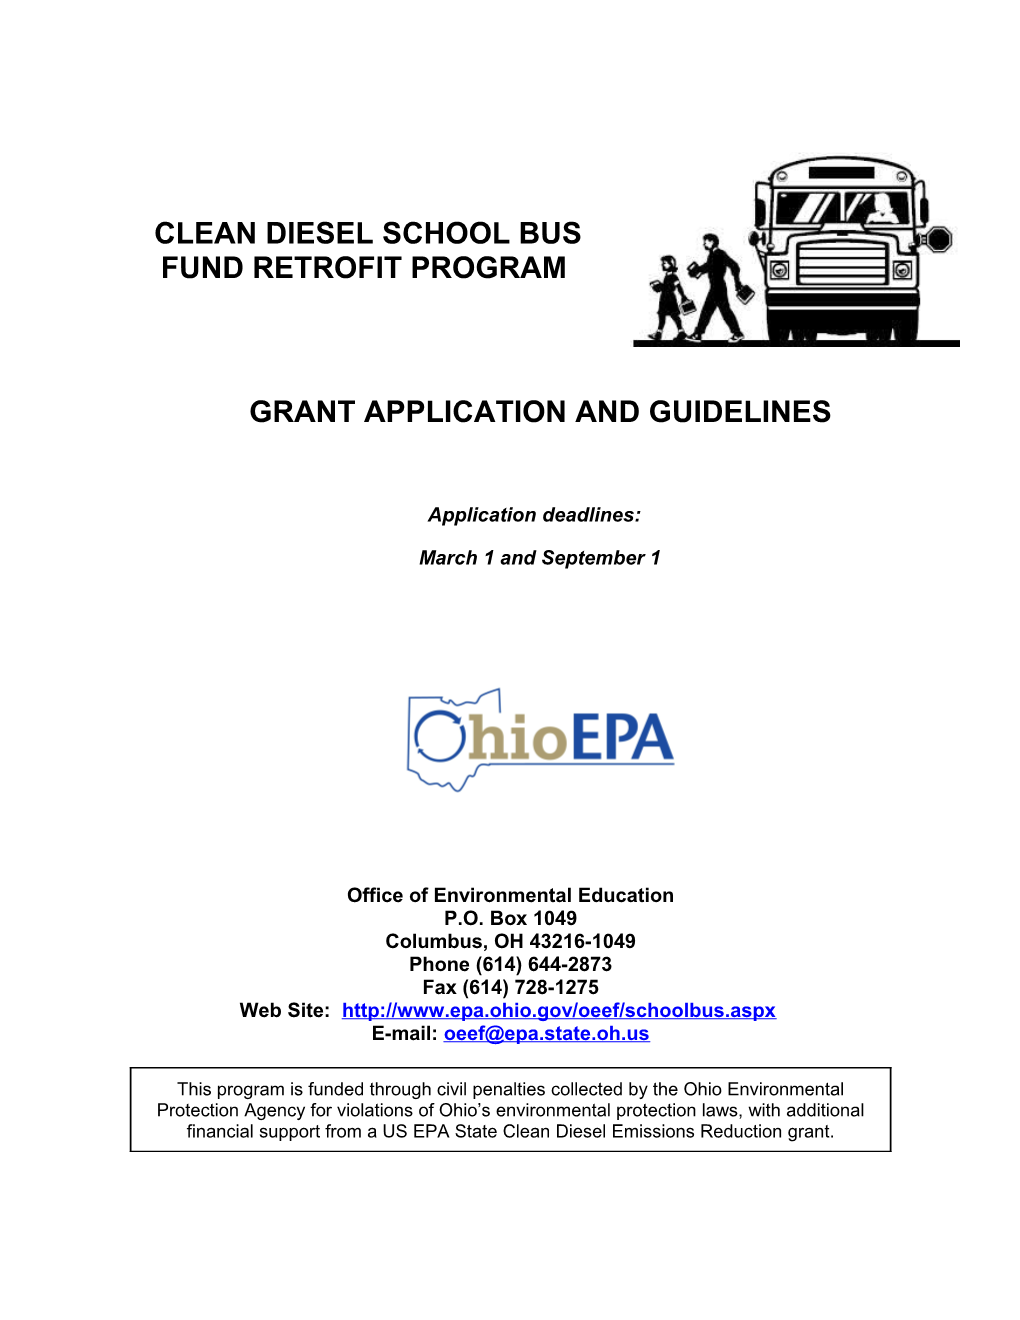 Clean Diesel School Bus Fund Retrofit Program